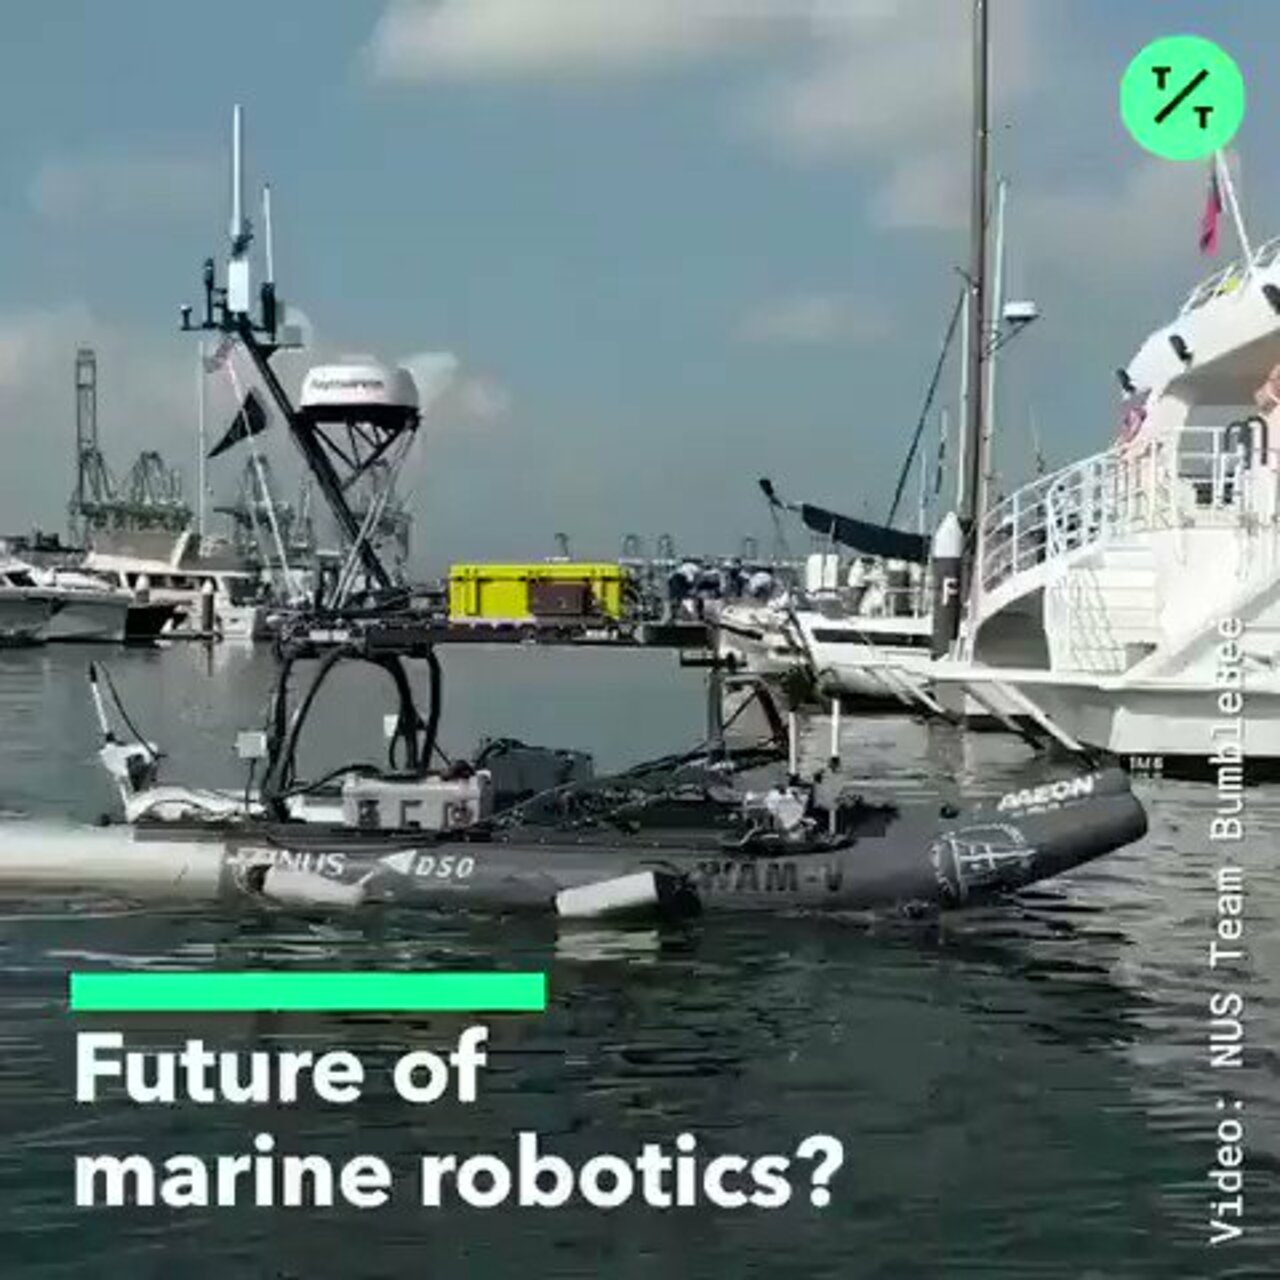 Future of marine #Robotics via @segundoatdell #AI #MachineLearning #ArtificialIntelligence #ML #Innovation #Autonomous #TechForGood #FutureOfWork cc: @ronald_vanloon @pbalakrishnarao @dirkschaar https://t.co/WPs0xjEGuh